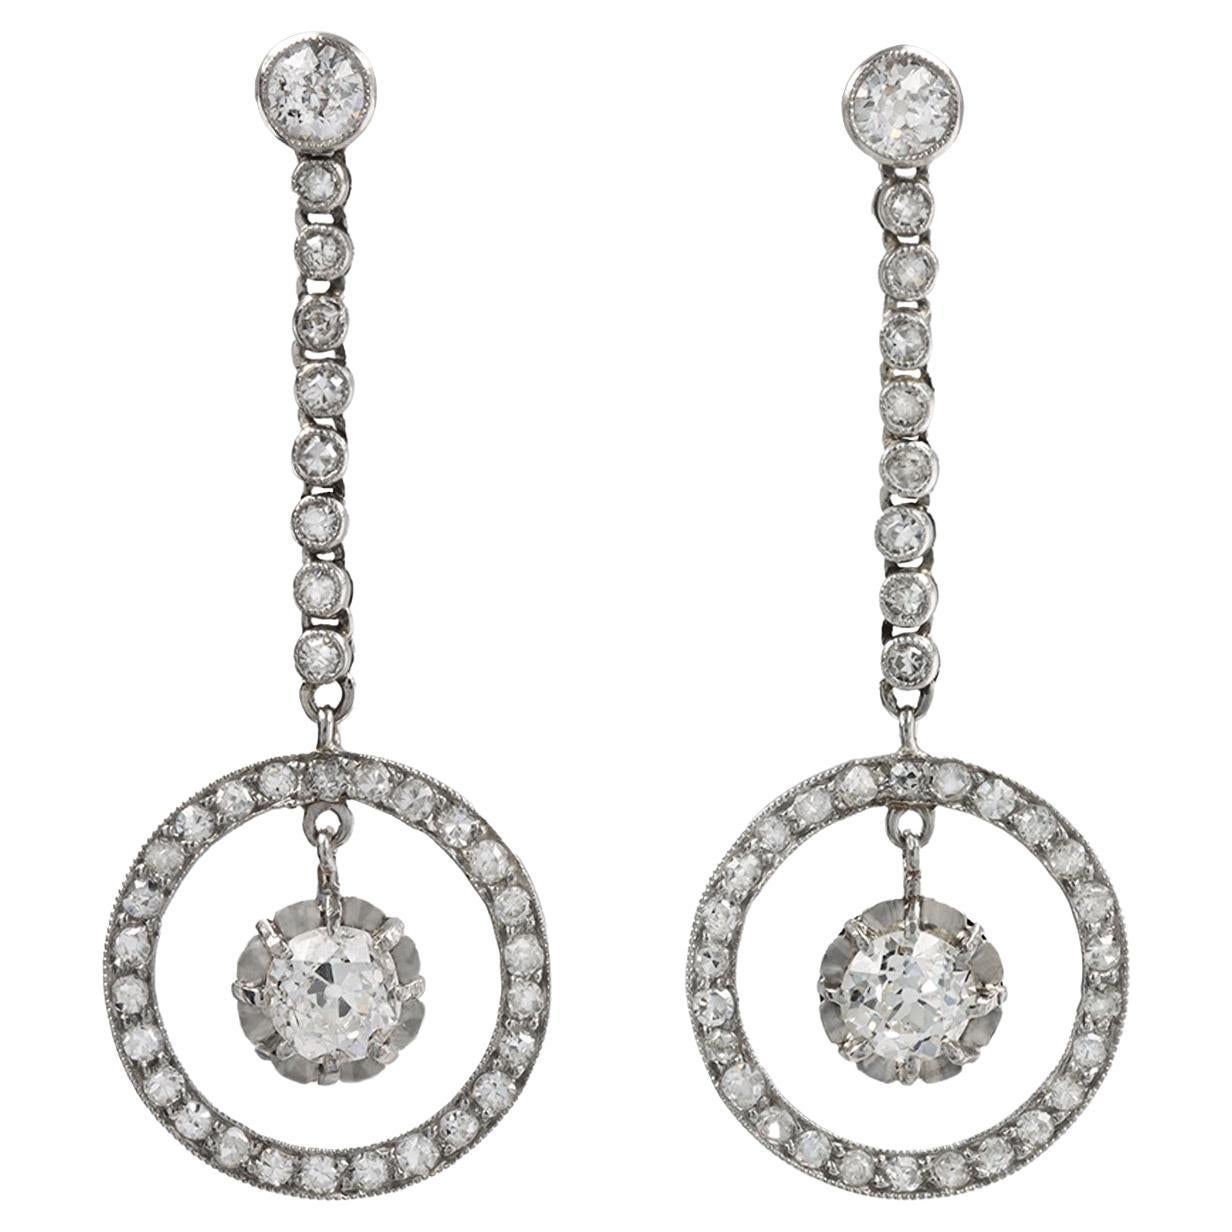 Art Deco diamond drop earrings, circa 1920.